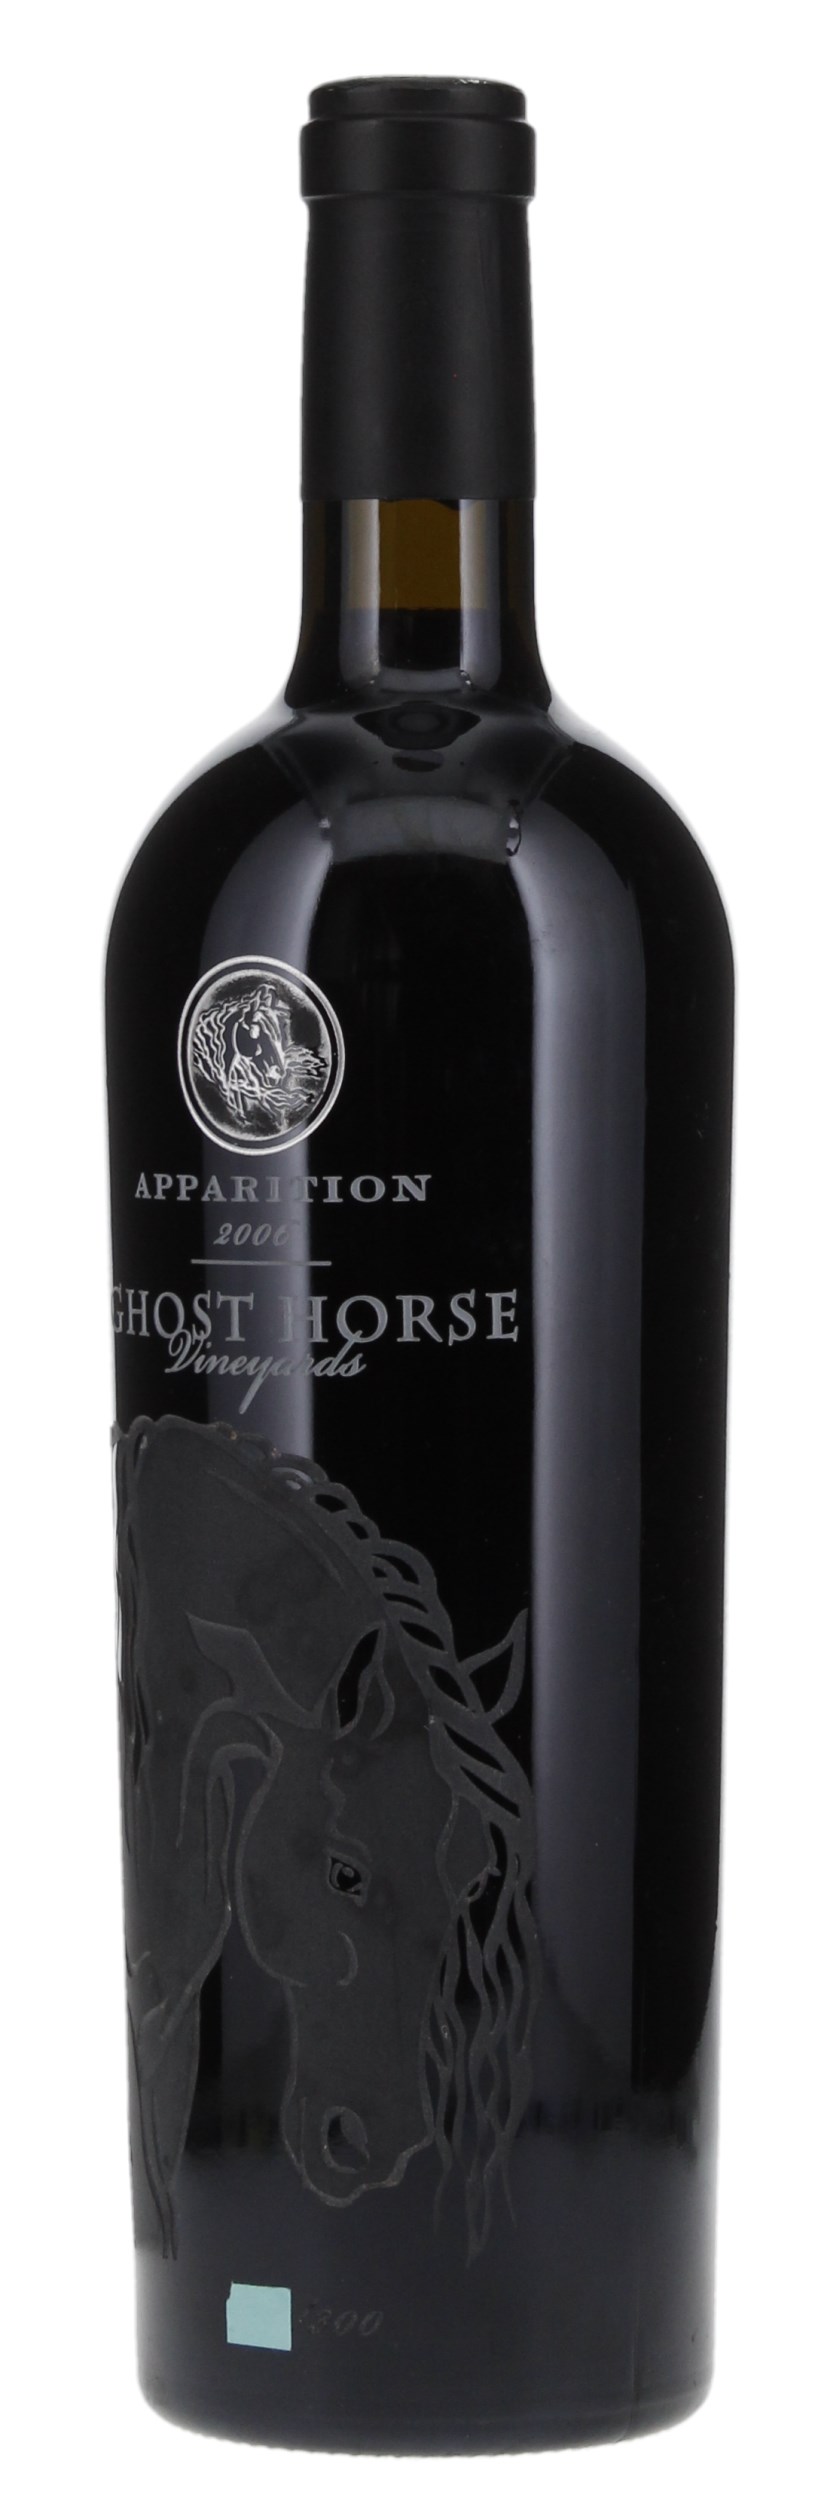 2006 Ghost Horse Vineyard Apparition Cabernet Sauvignon, 750ml